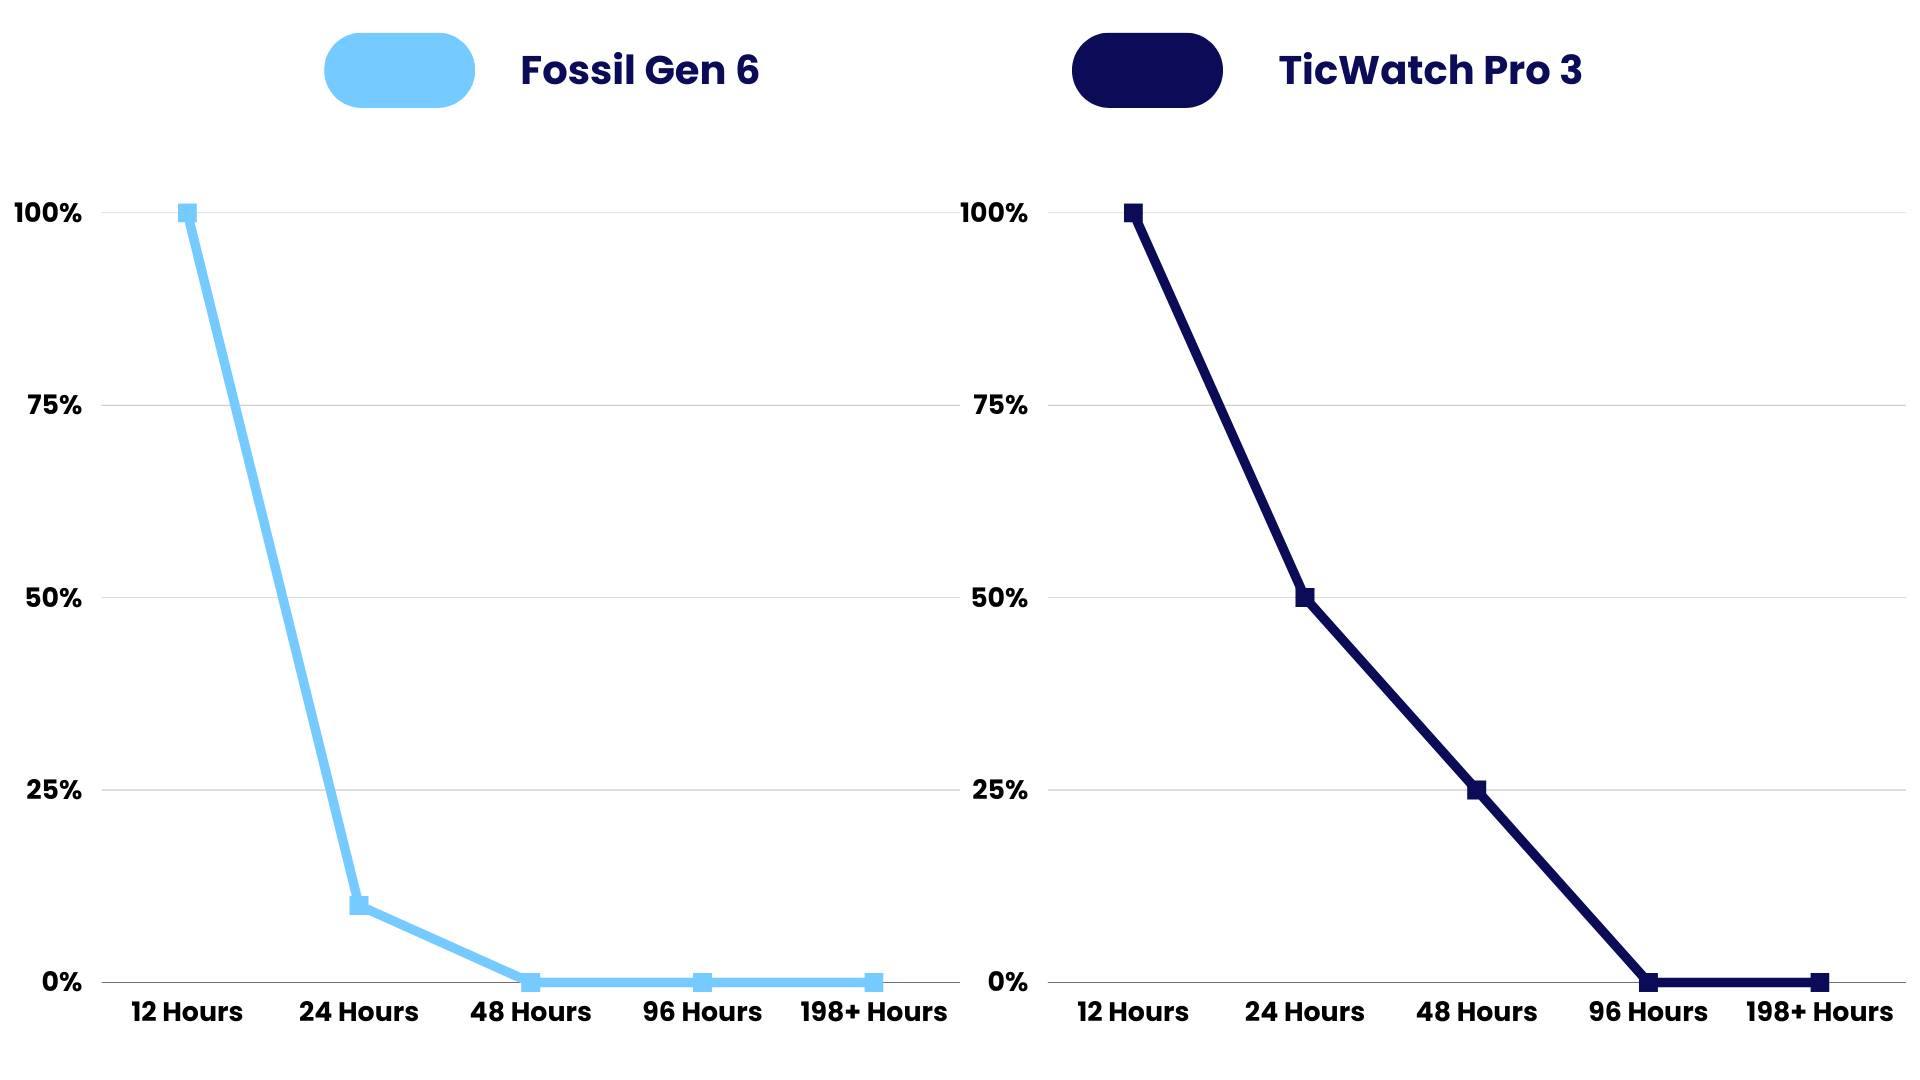 Lifespan Comparison of Fossil Gen 6 vs TicWatch Pro 3